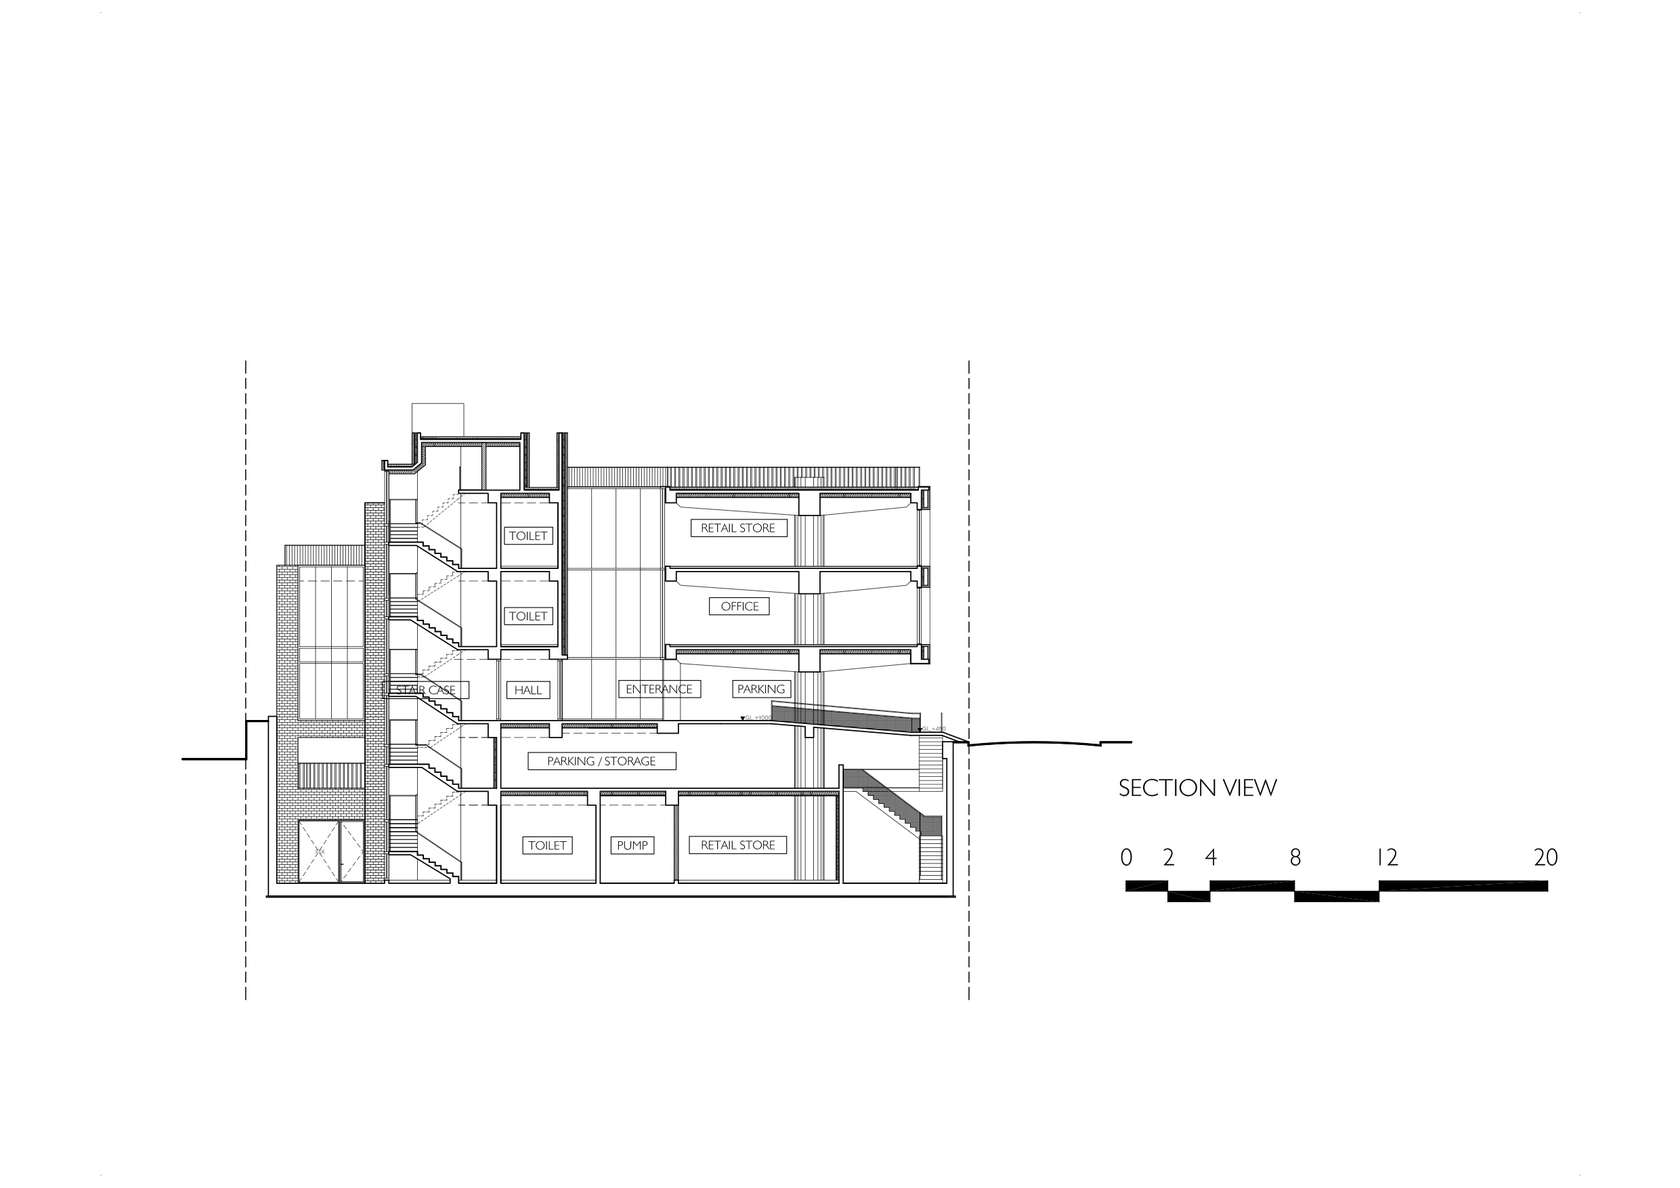 SJ office building - Architizer